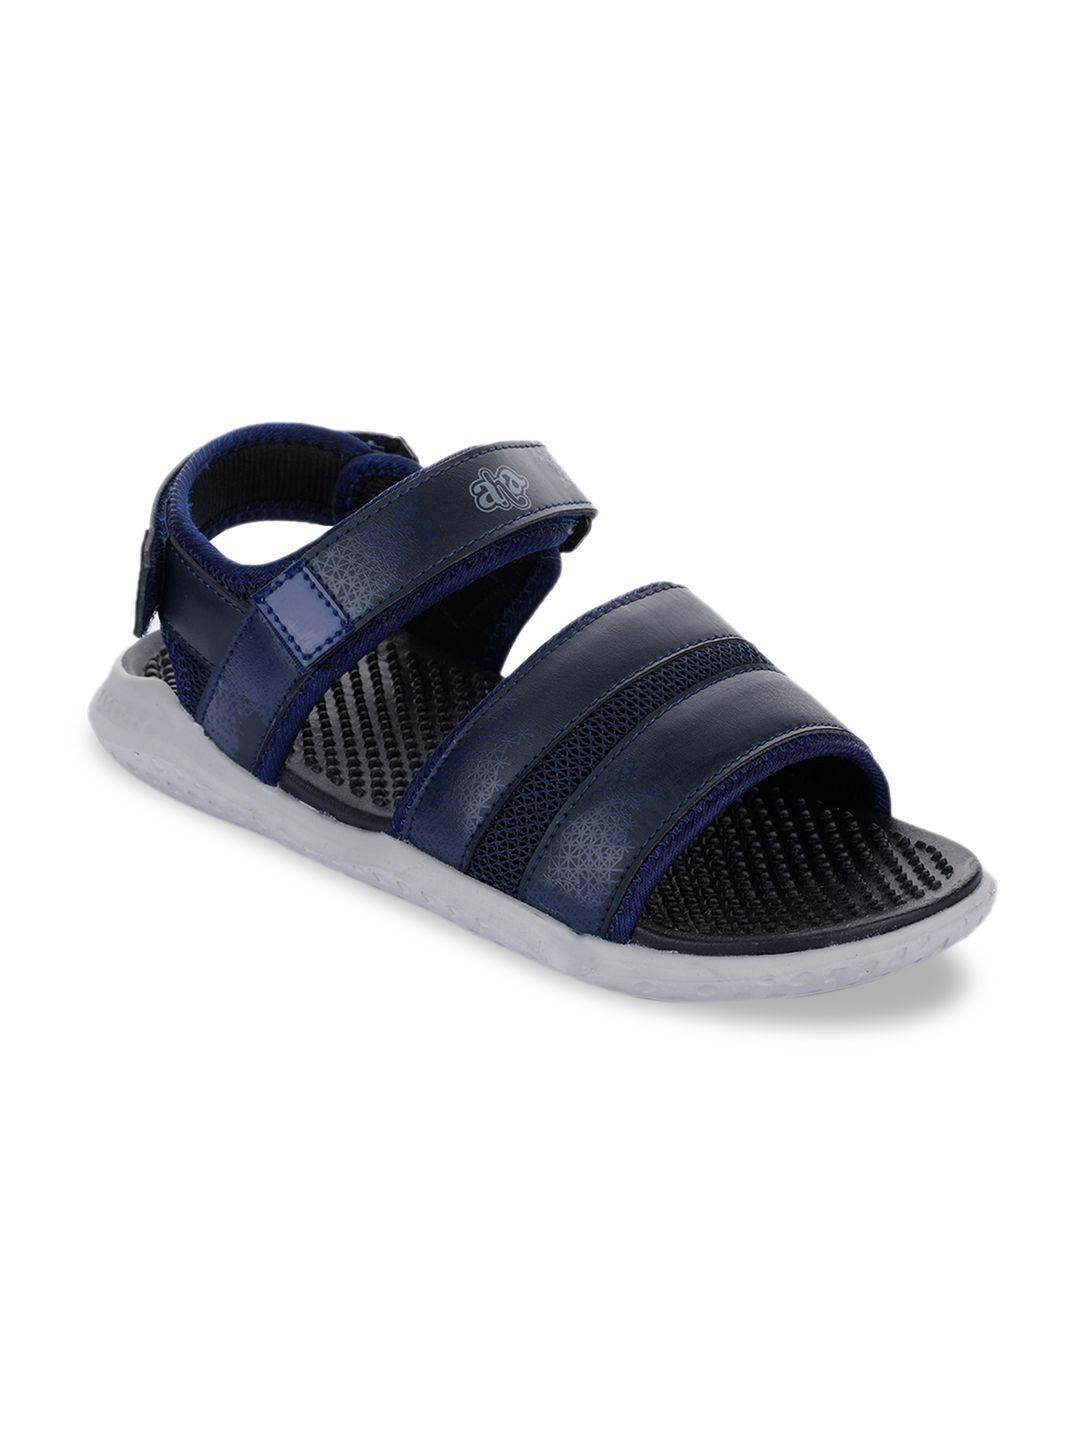 liberty-men-navy-blue-solid-sports-sandals